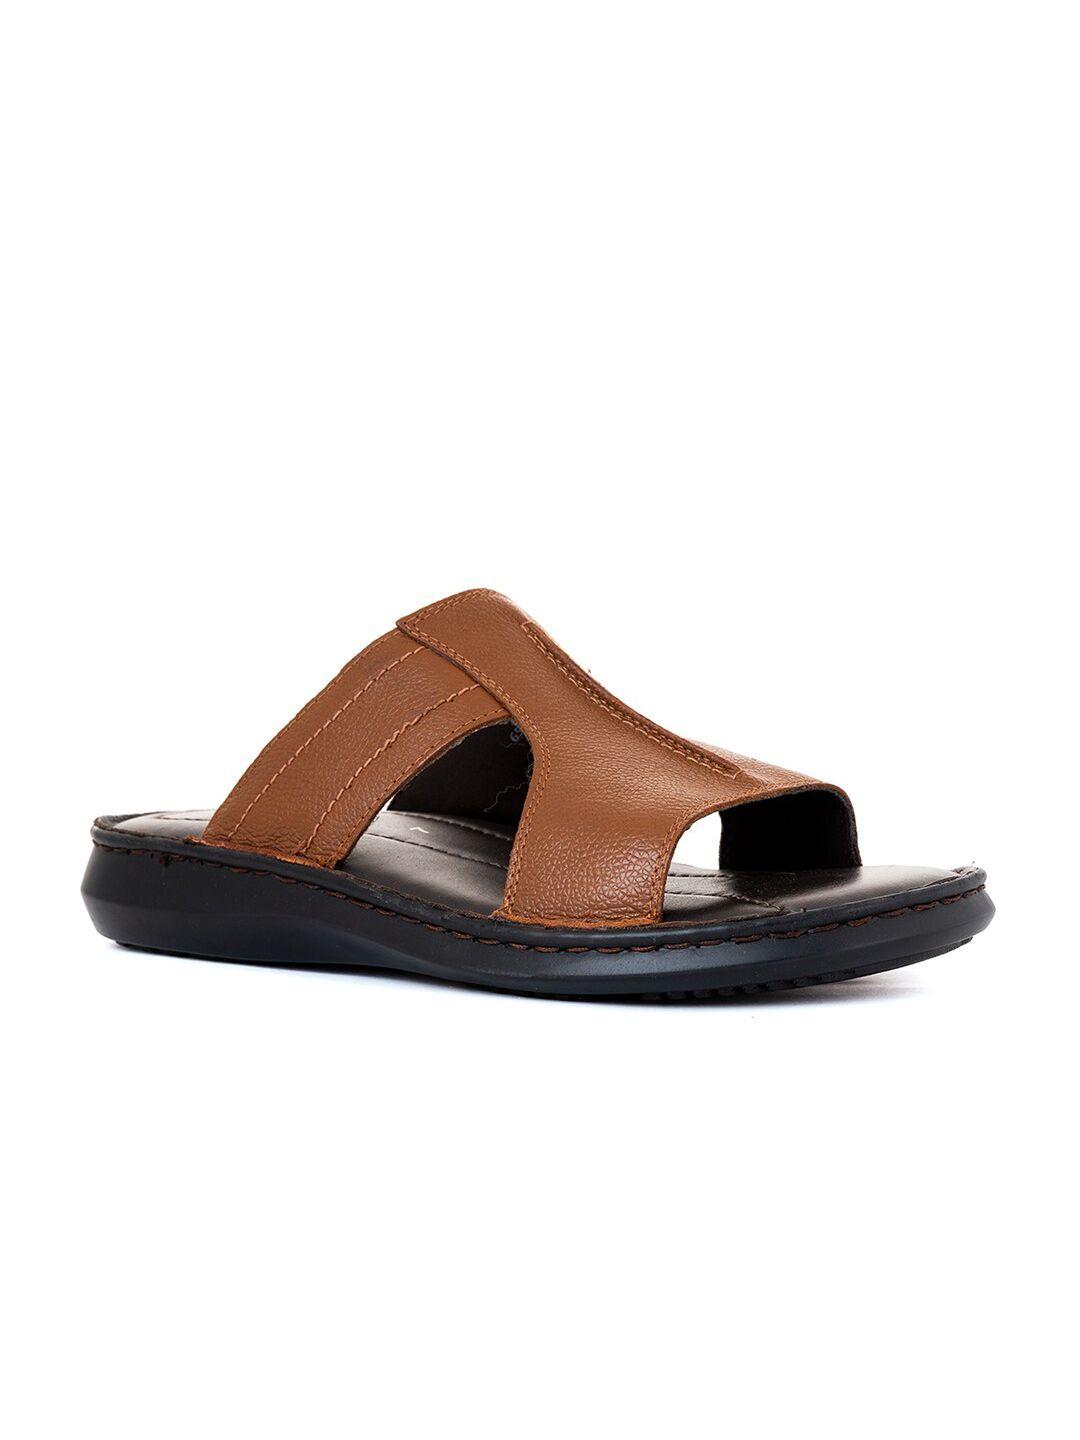 khadims men leather comfort sandals